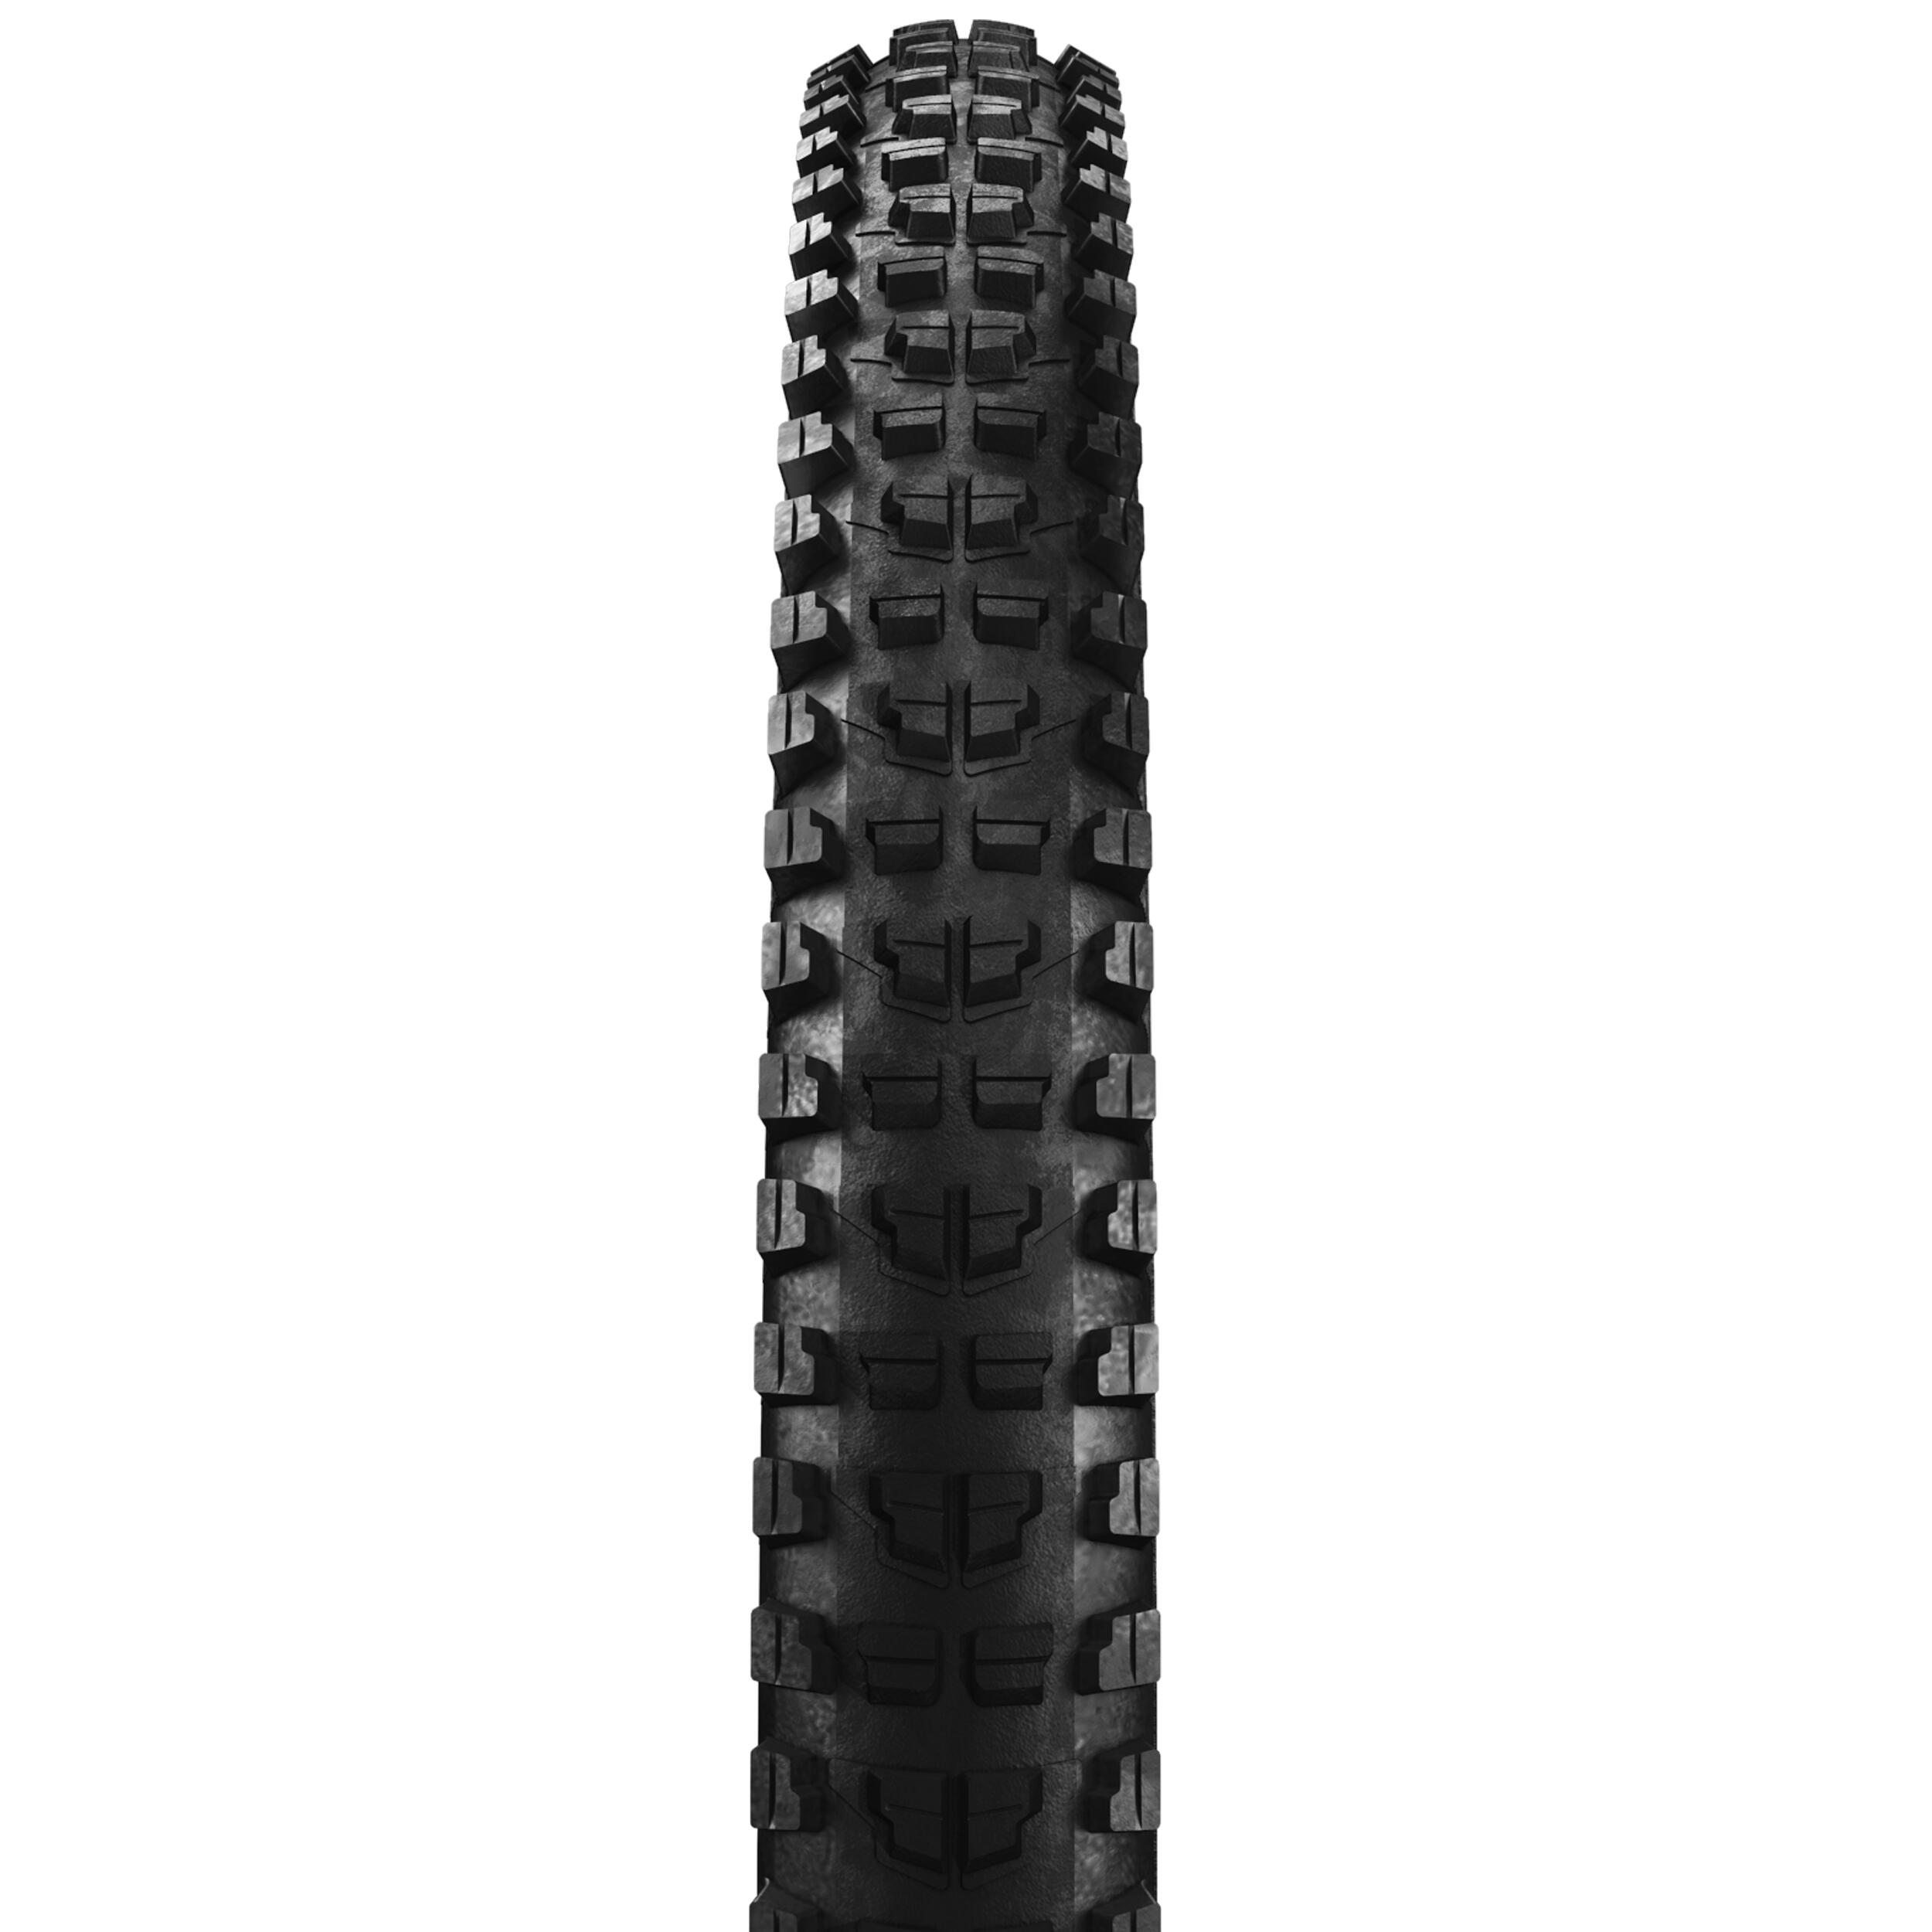 29" x 2.4 Mountain Bike Tyre Grip 500 3/6